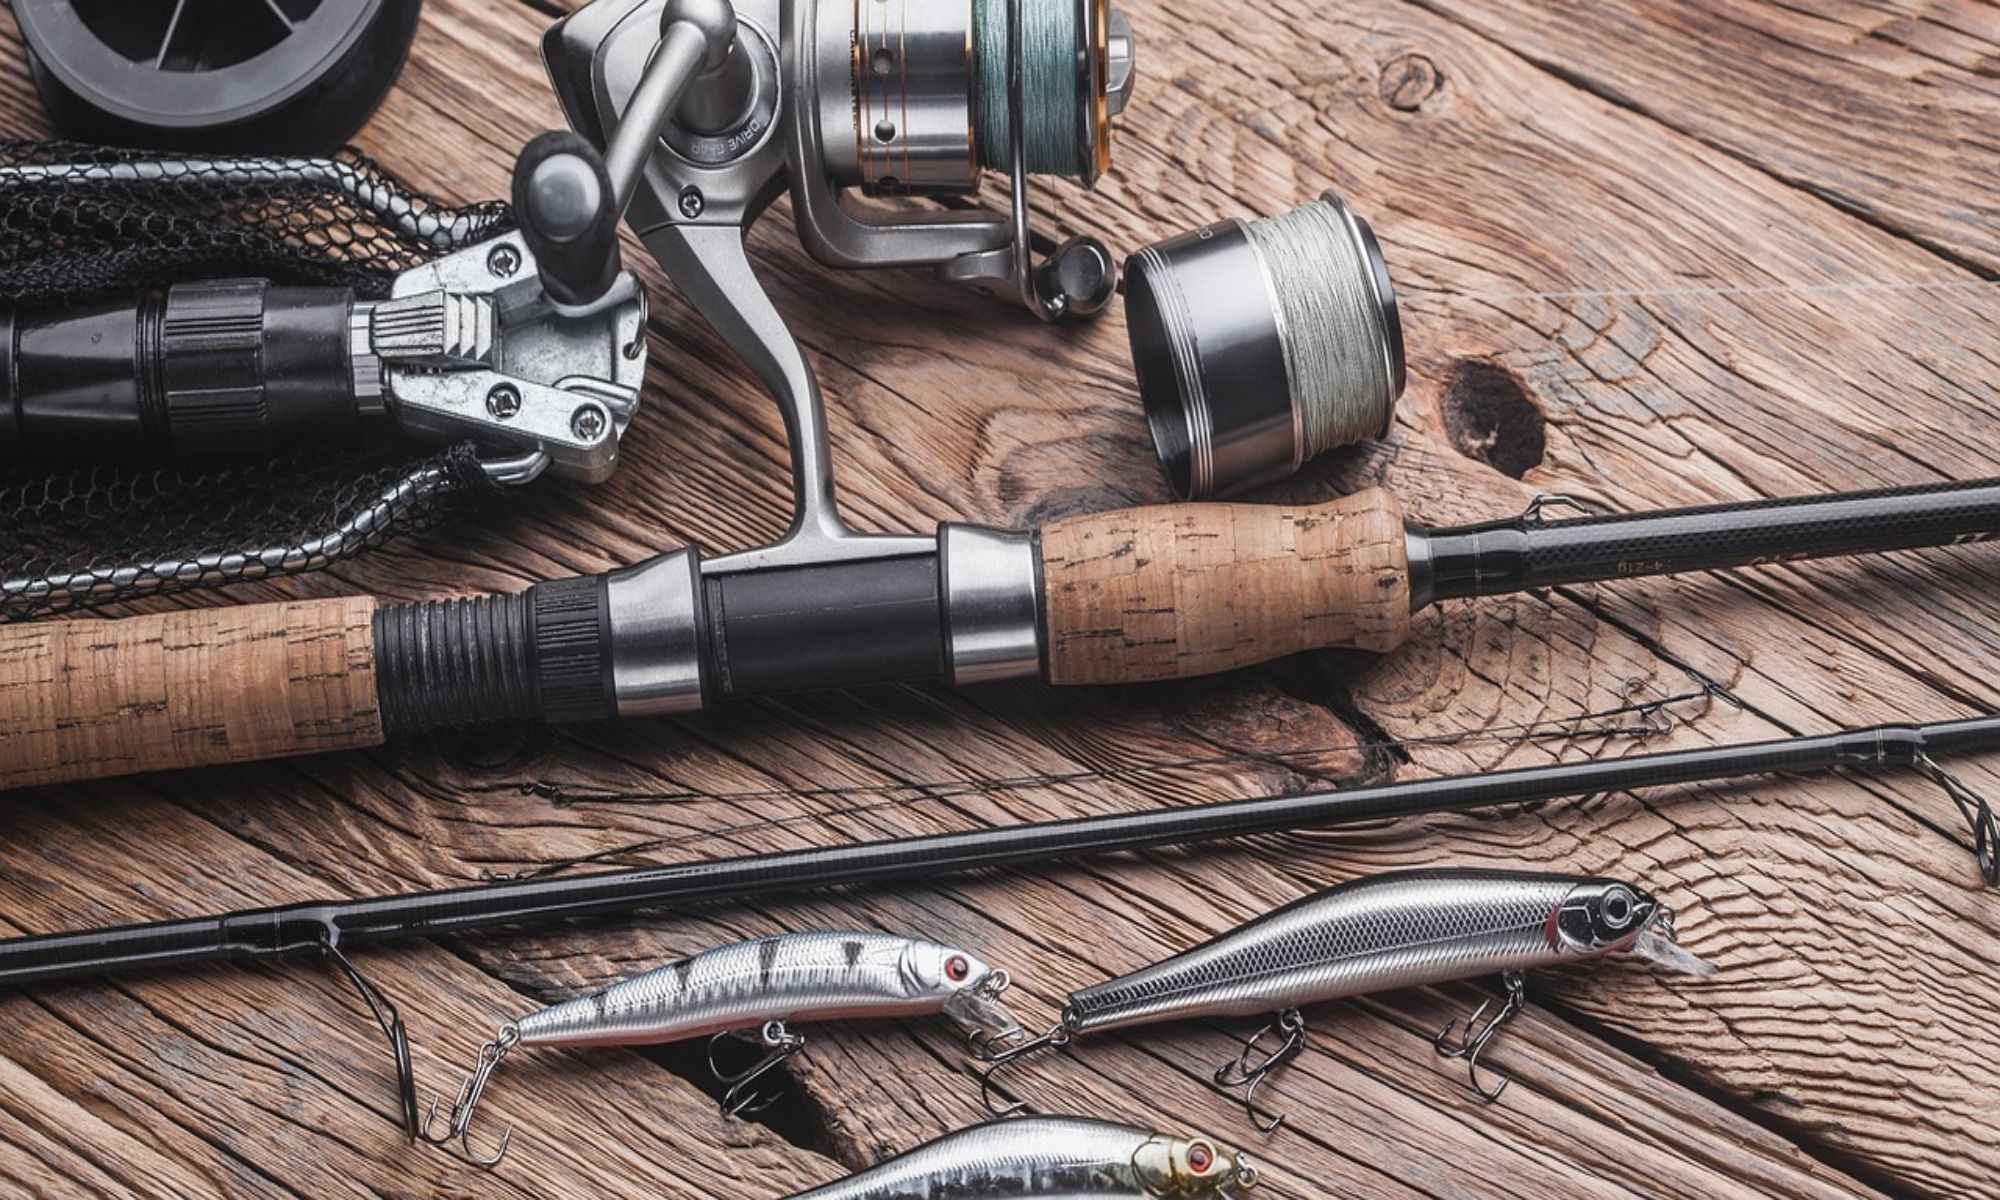 An Angler Wish List: Fishing Gifts Ideas